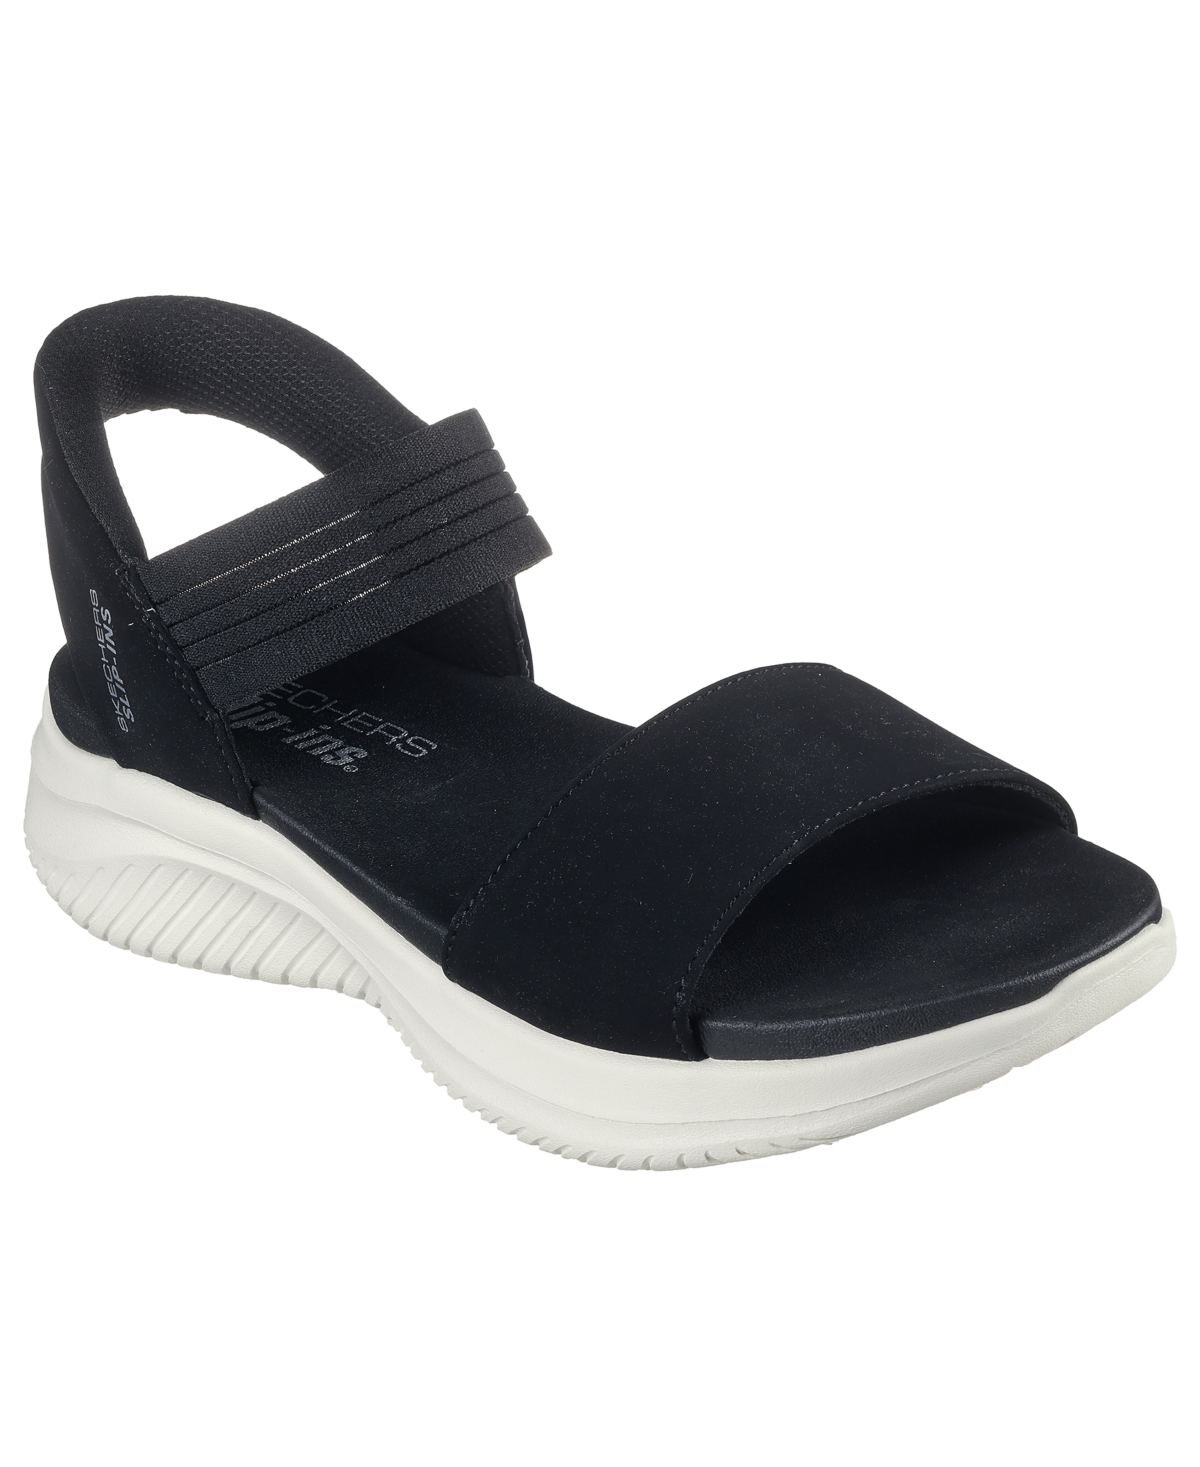 Women's Hands Free Slip-ins- Ultra Flex 3.0 - Summerville Sandals from Finish Line - Black